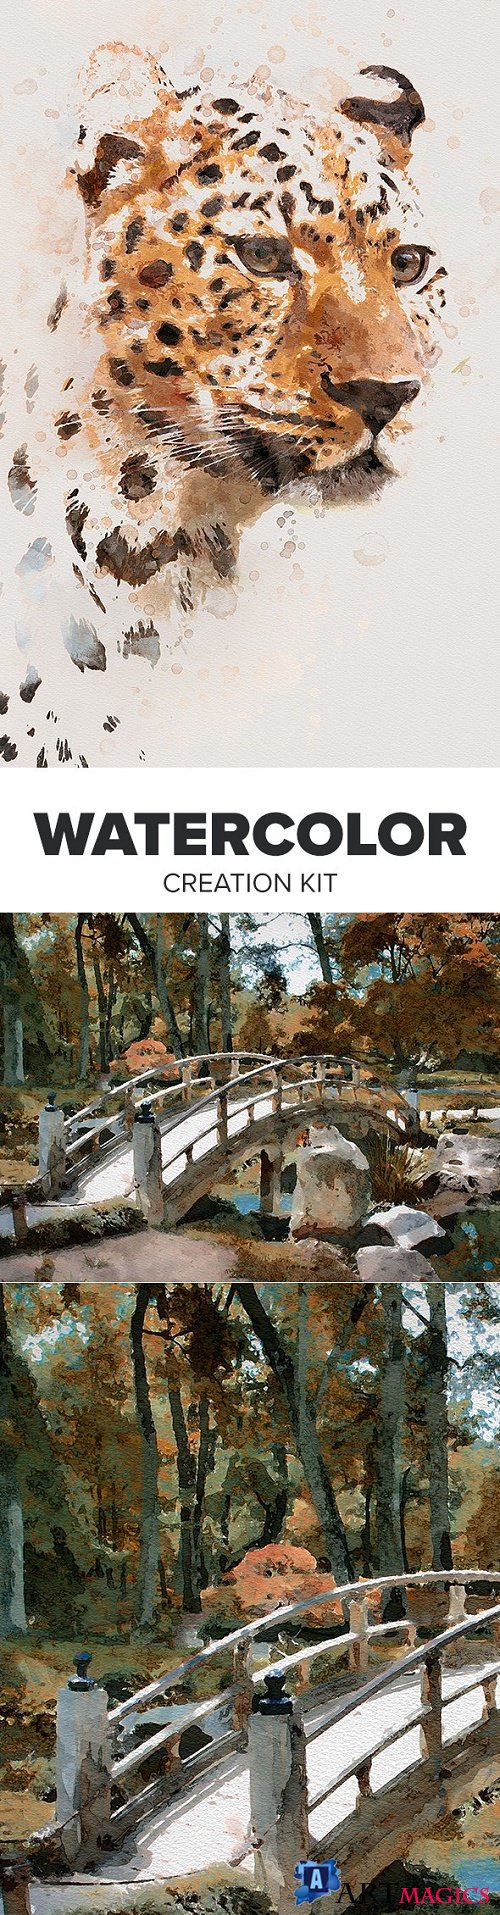 Watercolor Creation Kit 25712696